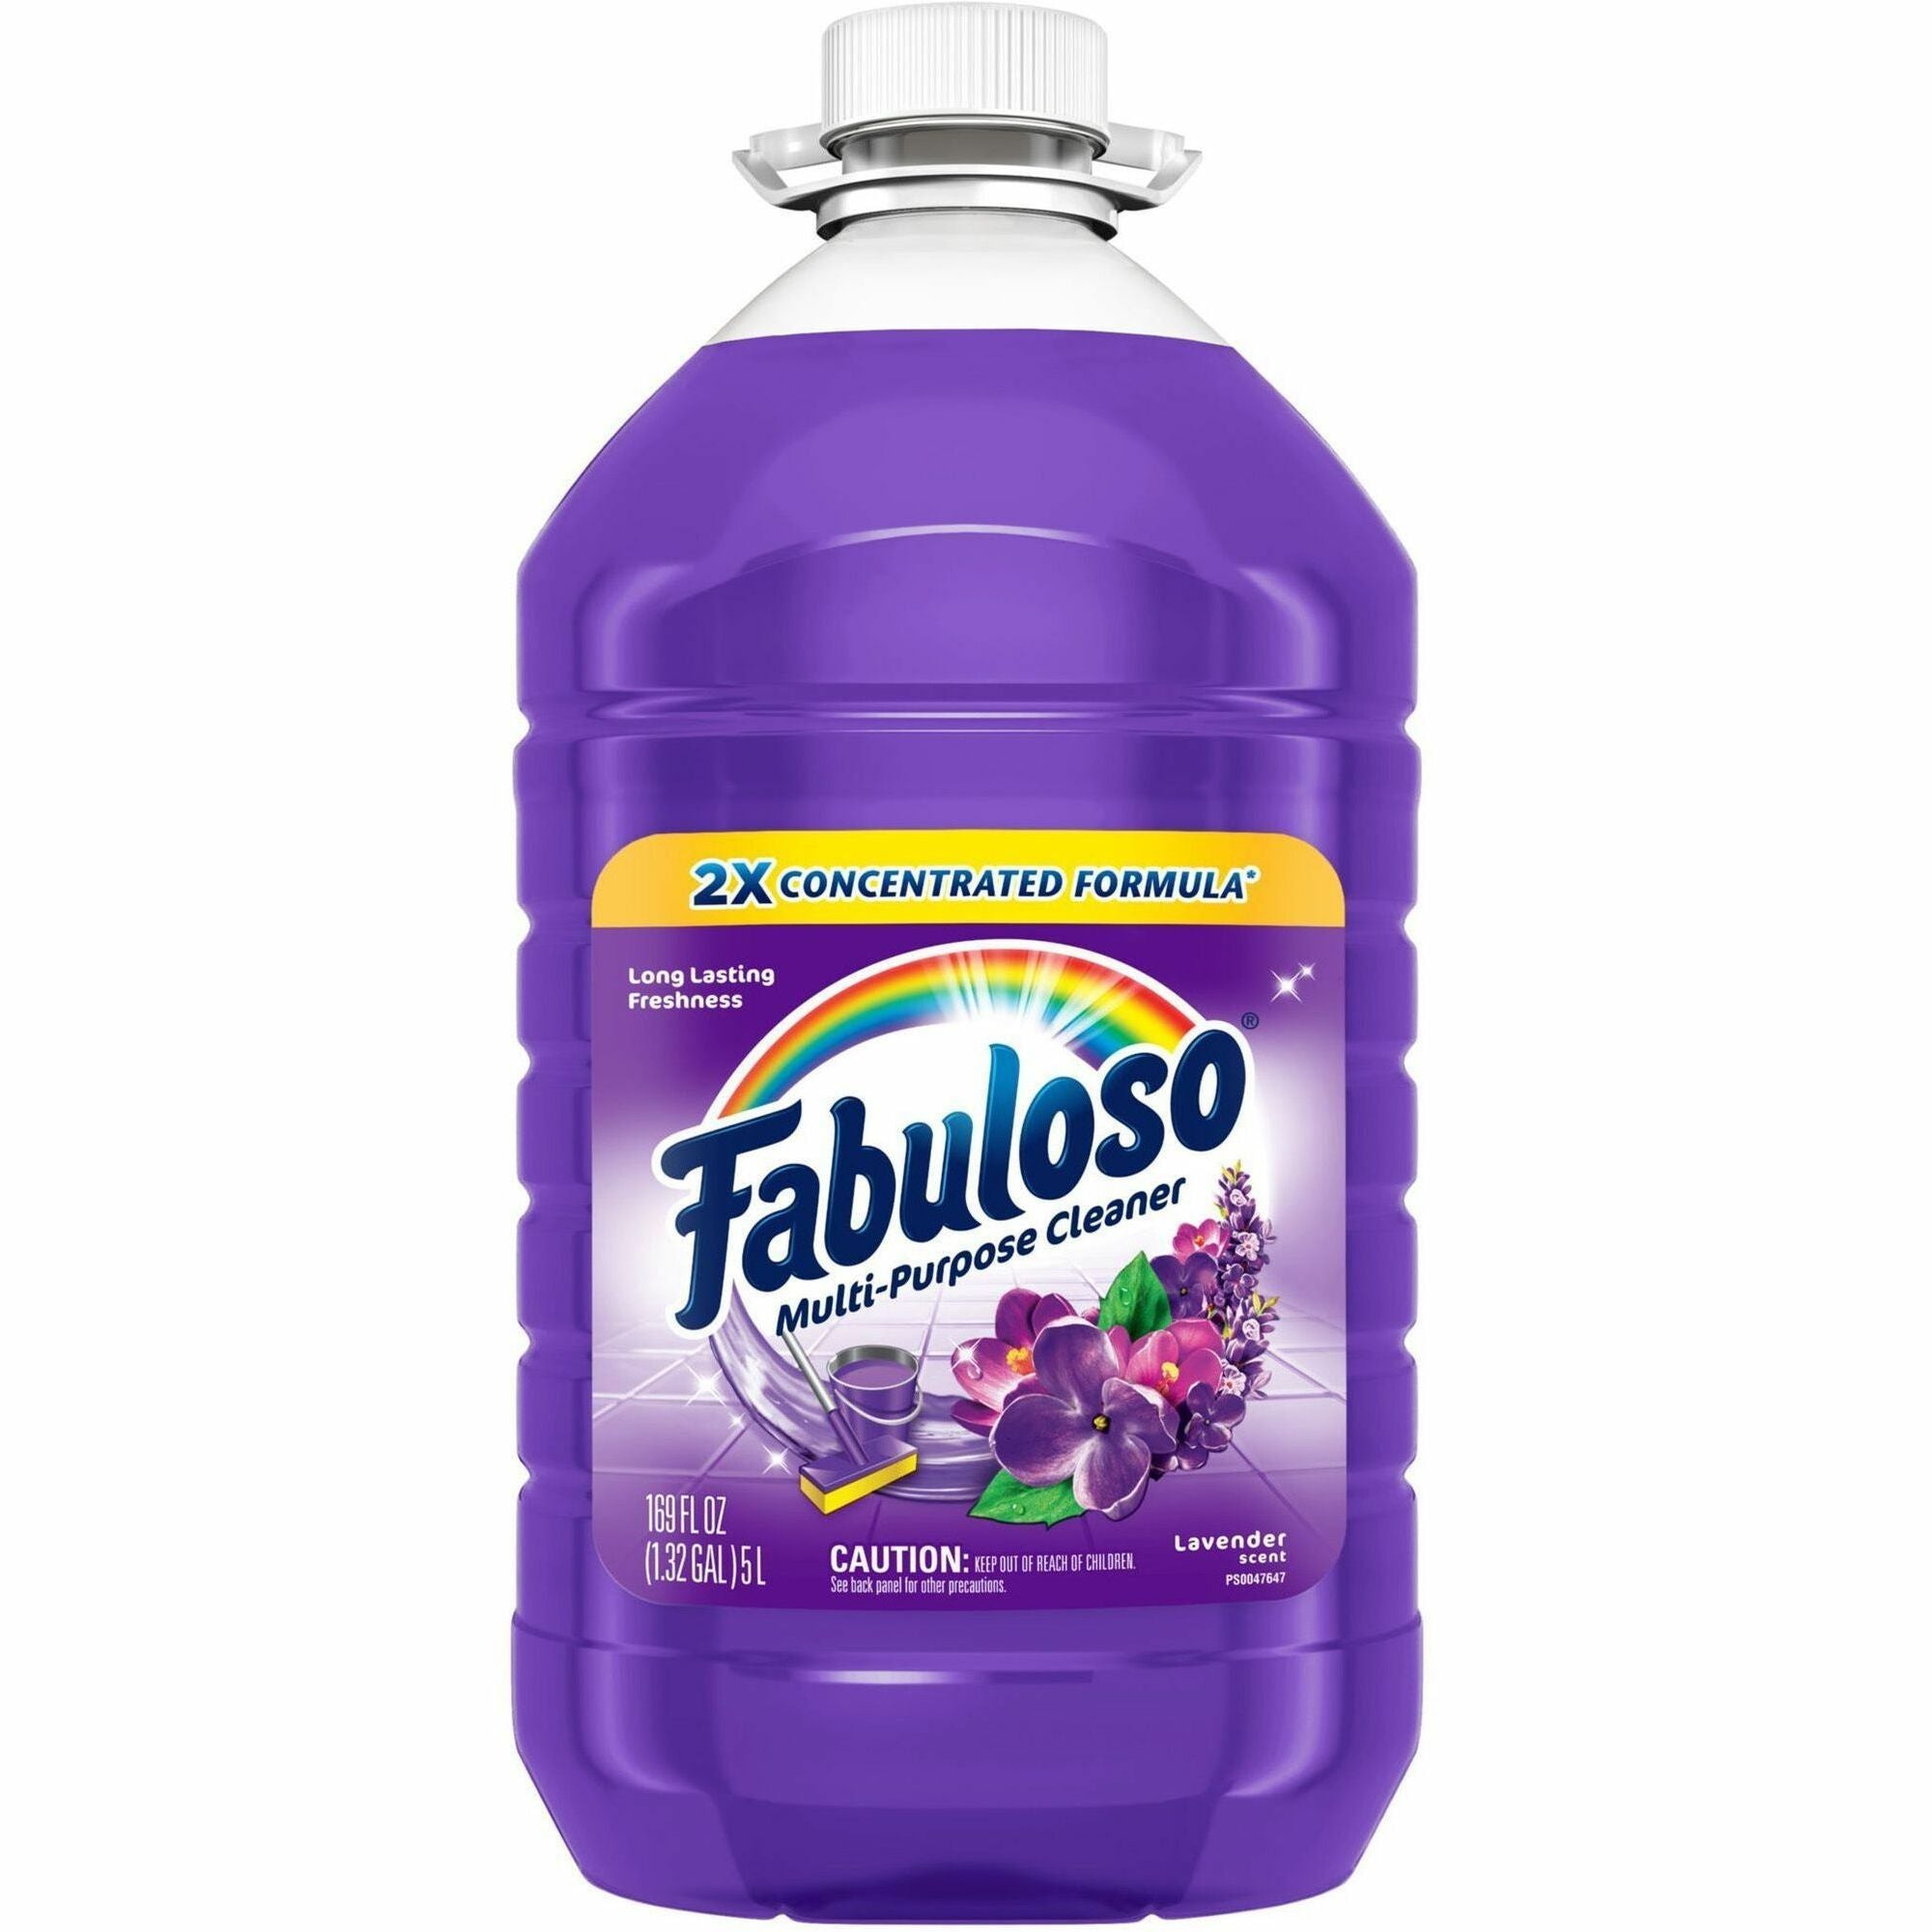 Fabuloso Multi-Purpose Cleaner - For Multipurpose - 169 fl oz (5.3 quart) - Lavender ScentBottle - 1 Each - Residue-free, pH Neutral, Child Safety Cap - Purple - 1